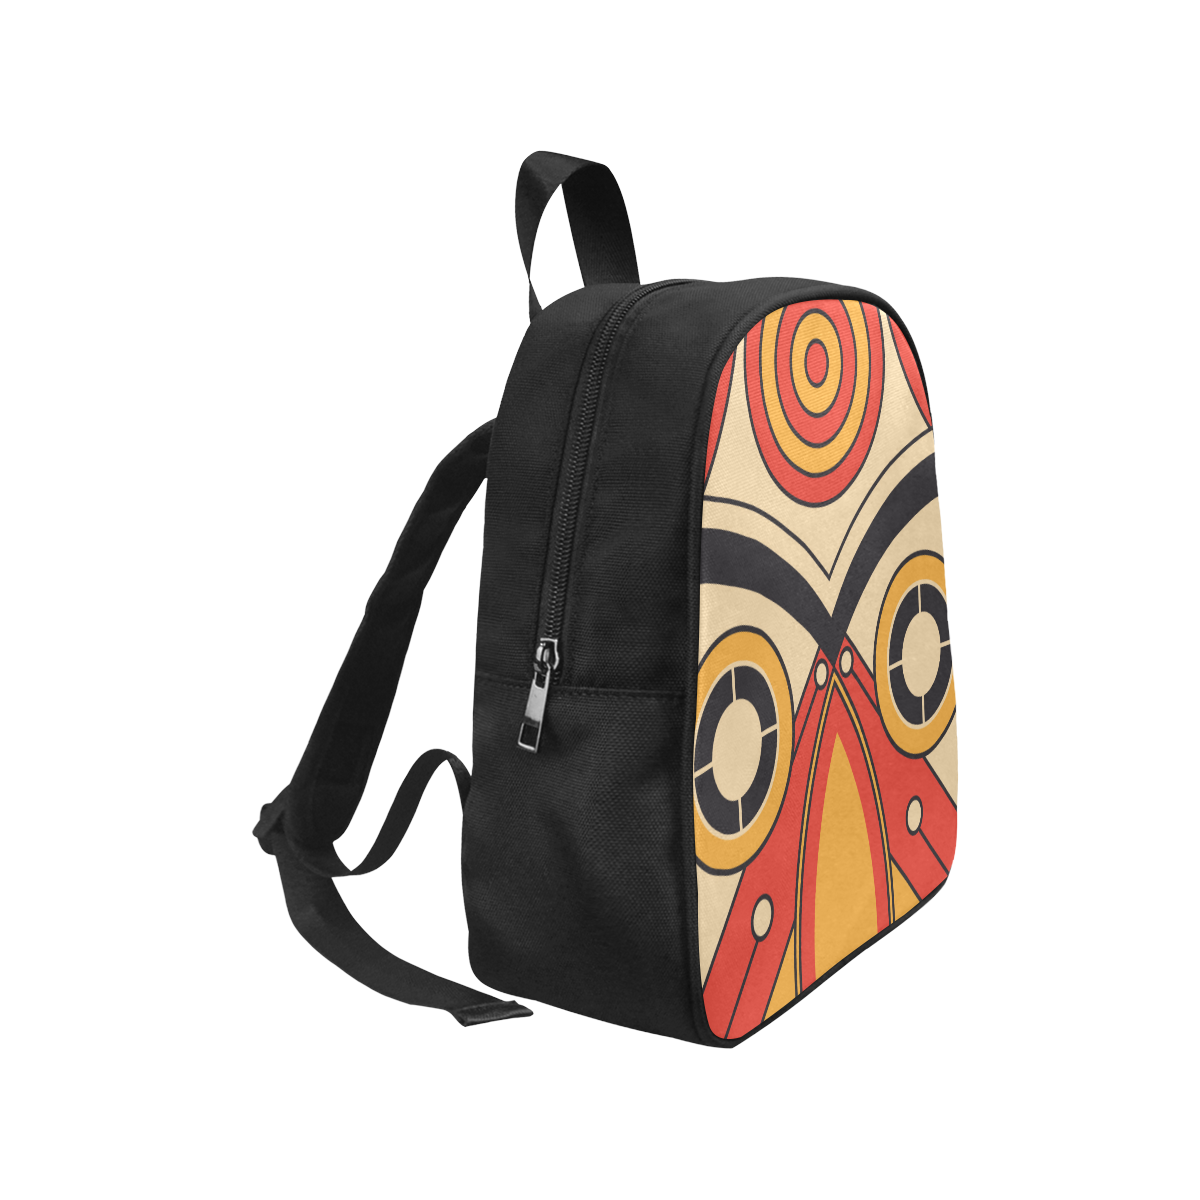 Geo Aztec Bull Tribal Fabric School Backpack (Model 1682) (Small)